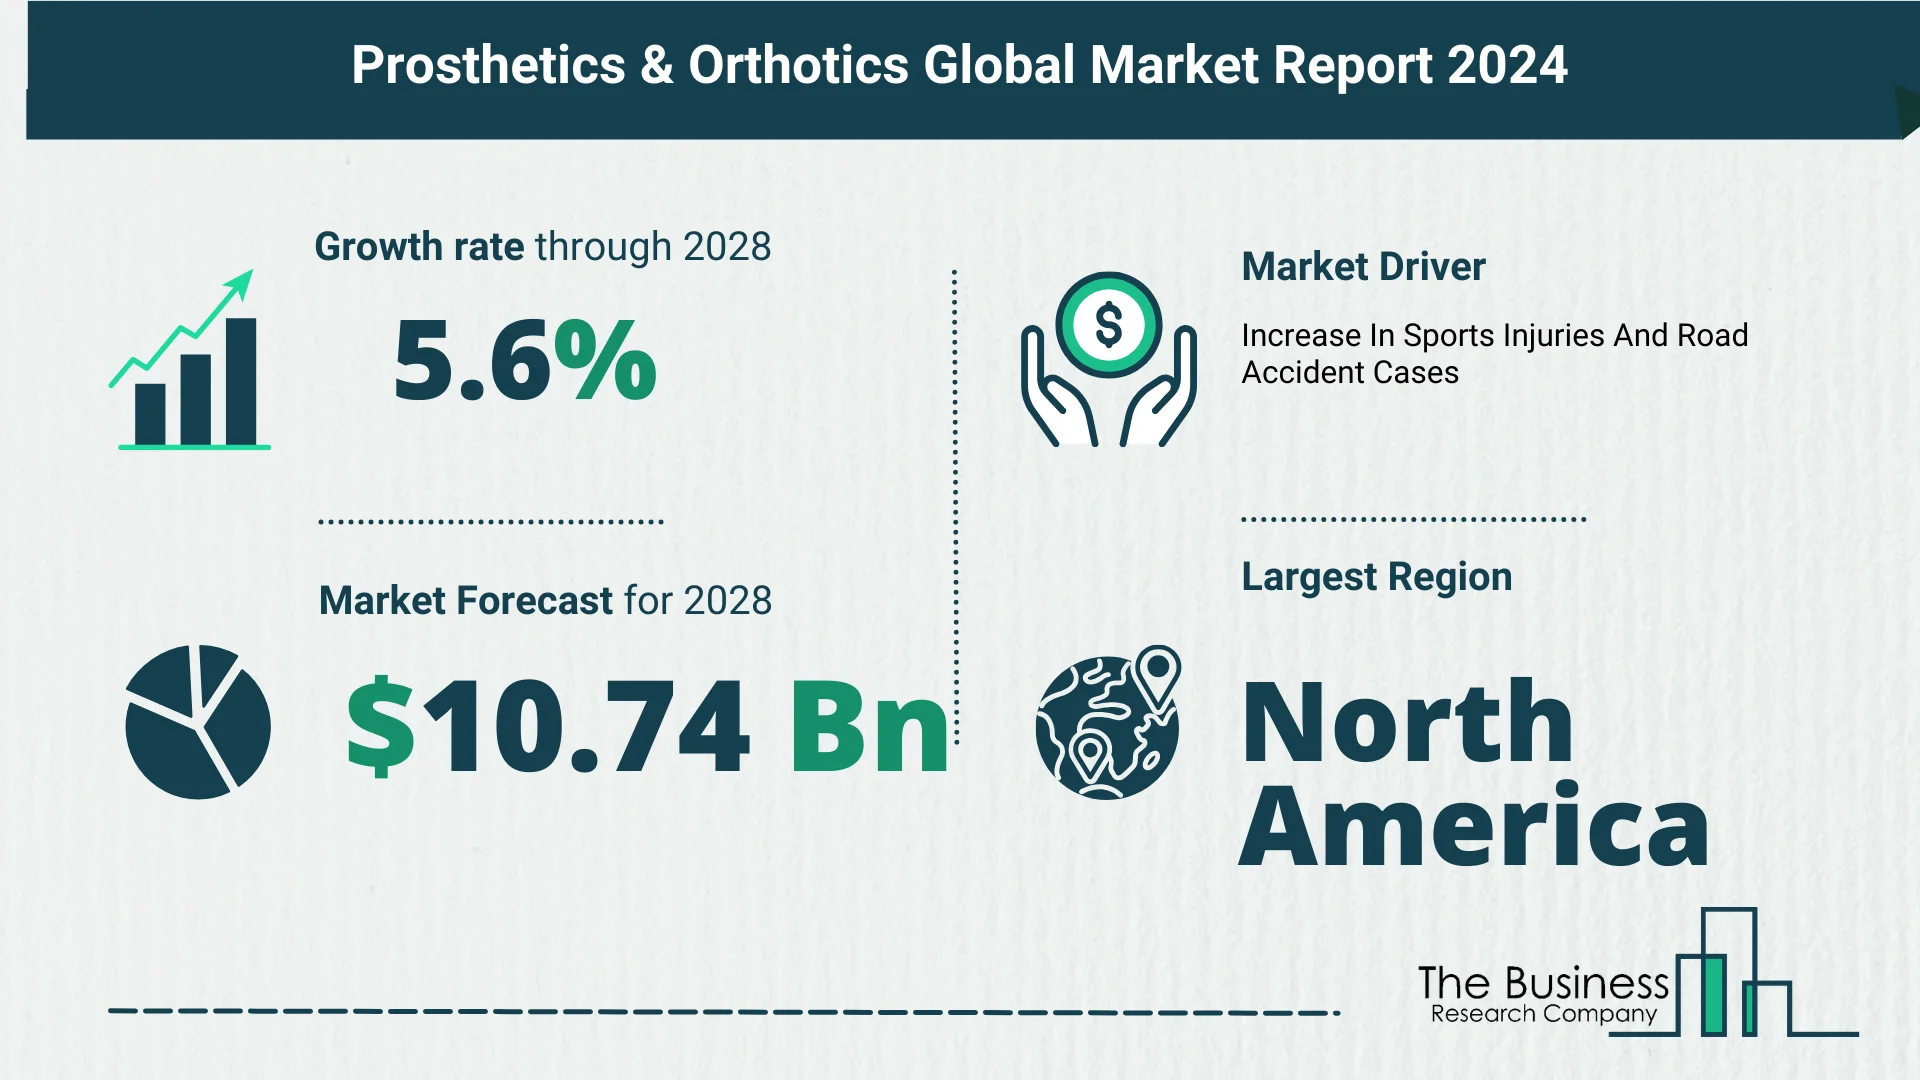 Global Prosthetics & Orthotics Market Report